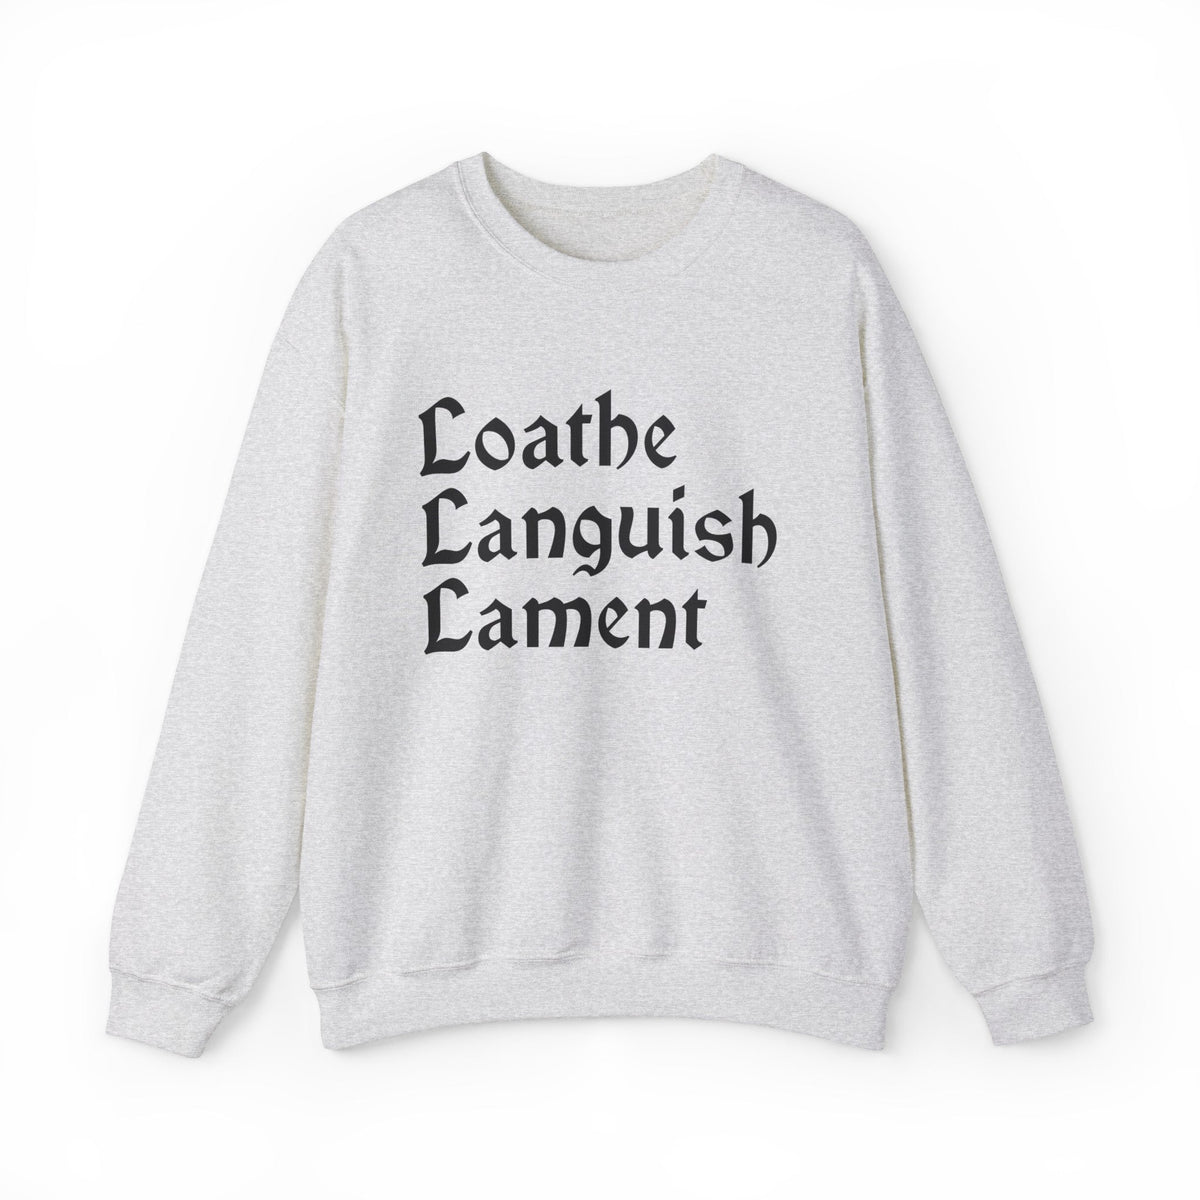 Loathe Languish Lament Gothic Crew Neck Sweatshirt - Goth Cloth Co.Sweatshirt29764385908019474265